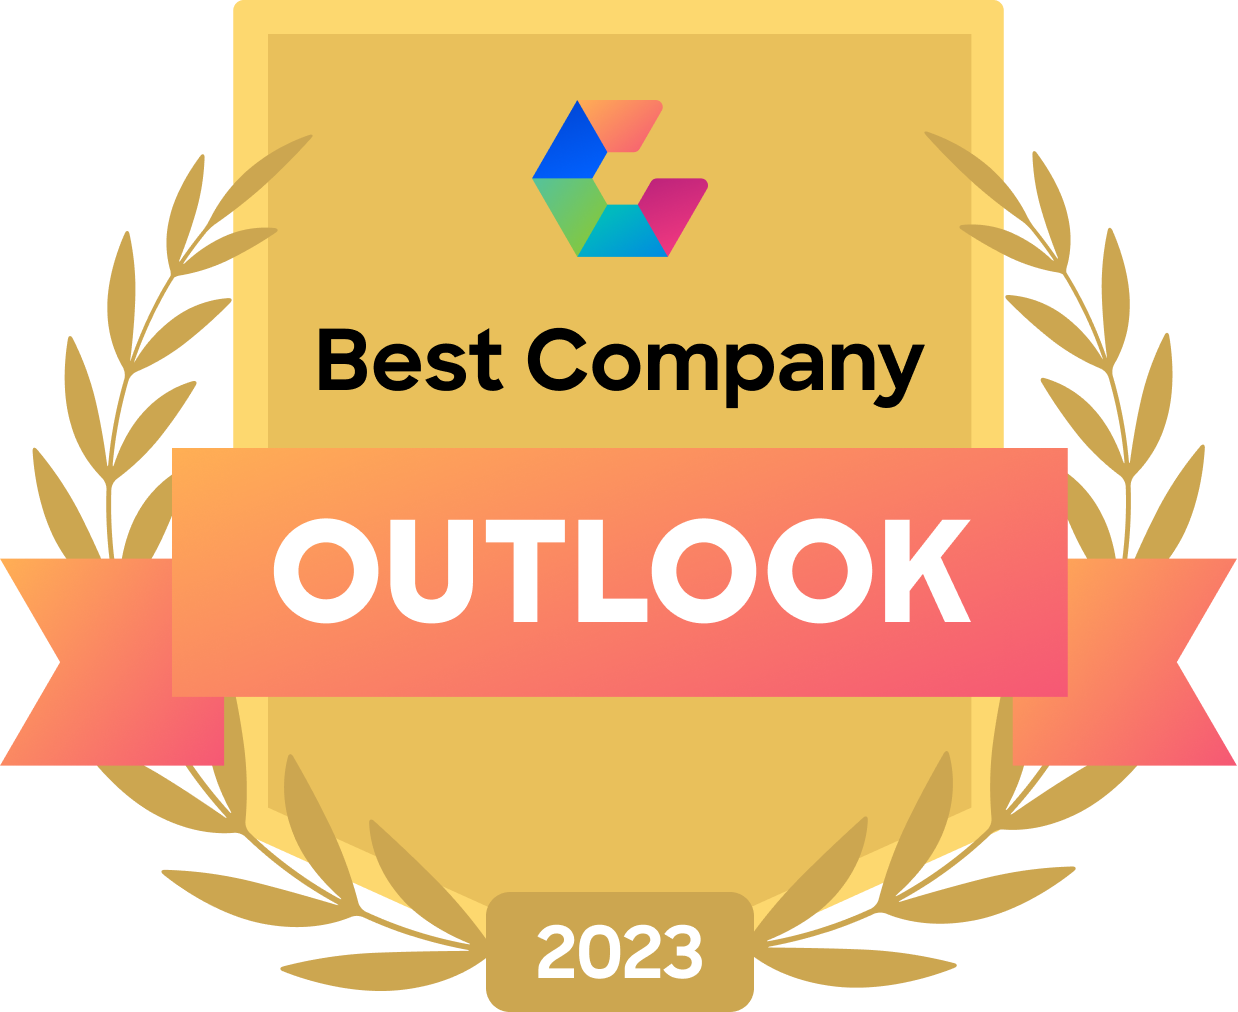 Best Company in Outlook